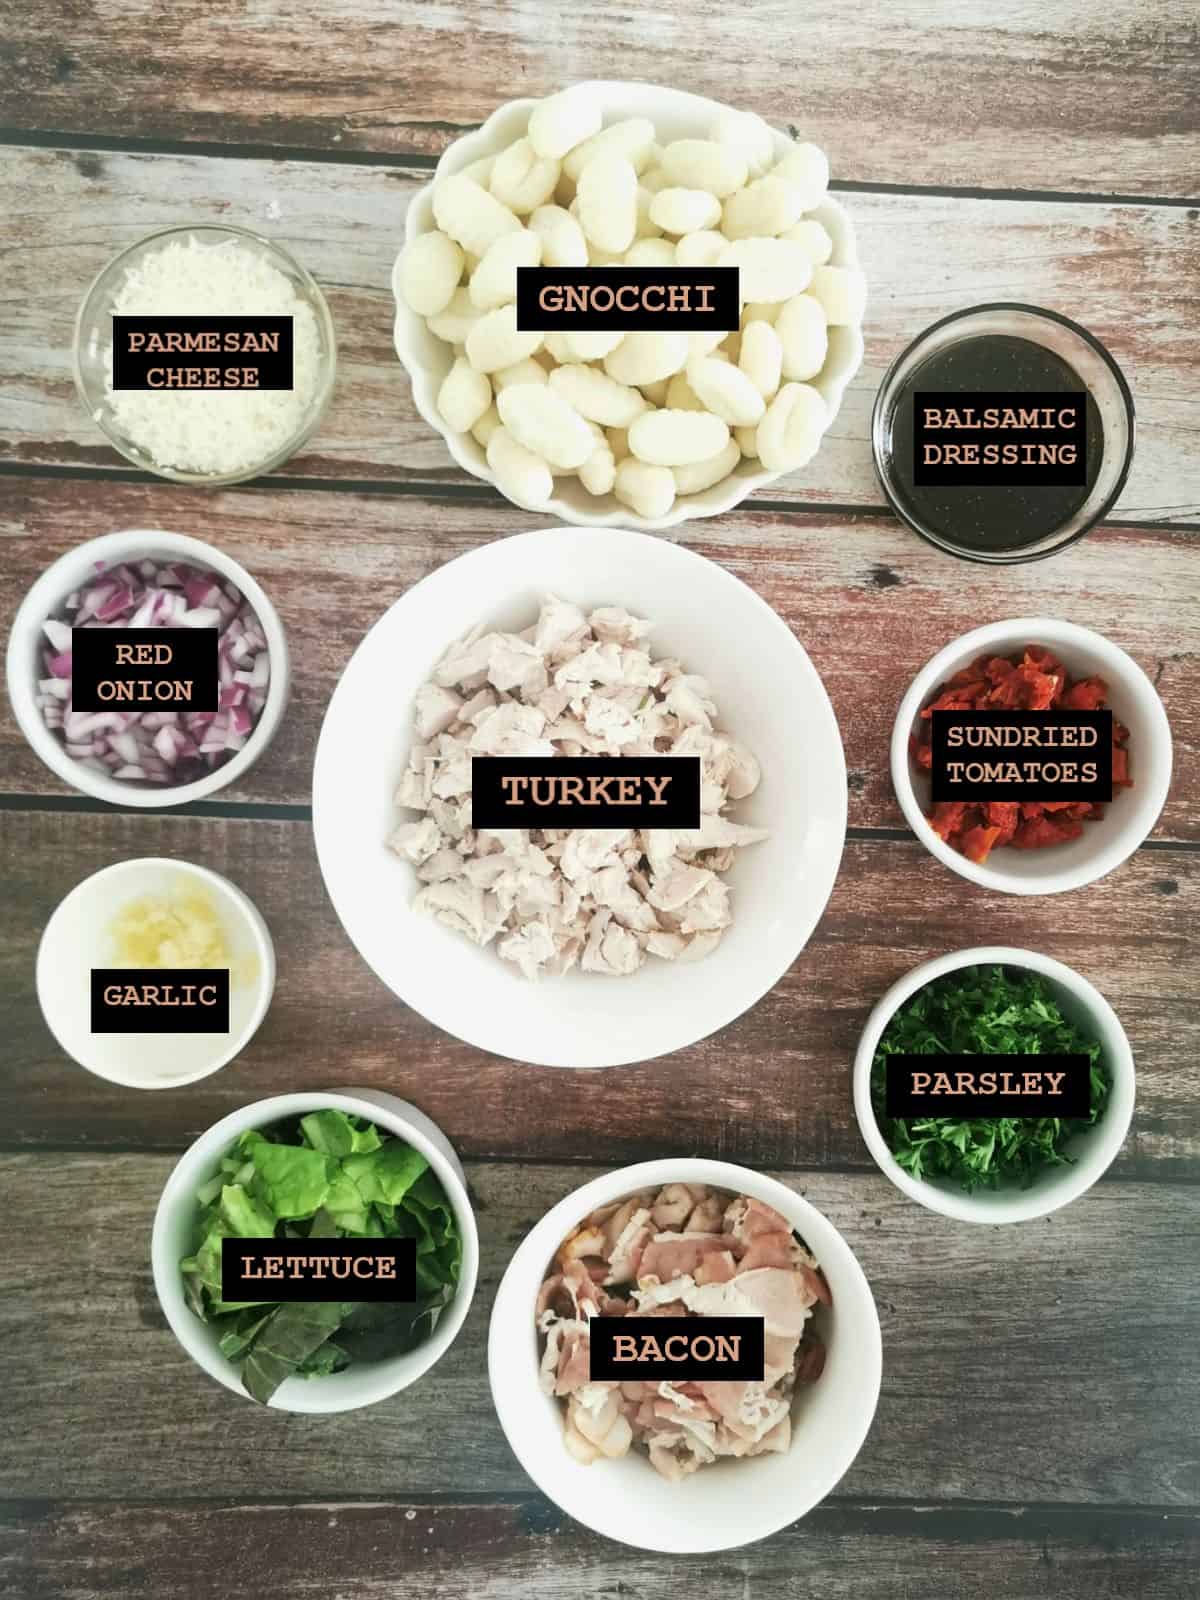 leftover turkey salad (with gnocchi) - ingredients 